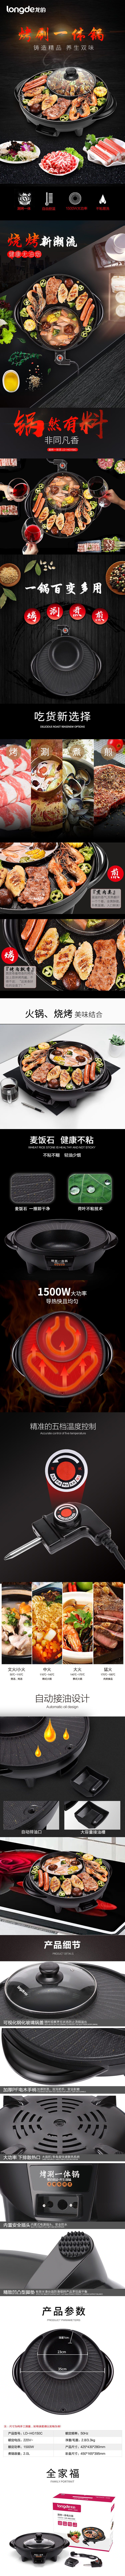 LD-HG150C 涮烤一体锅 (1).jpg